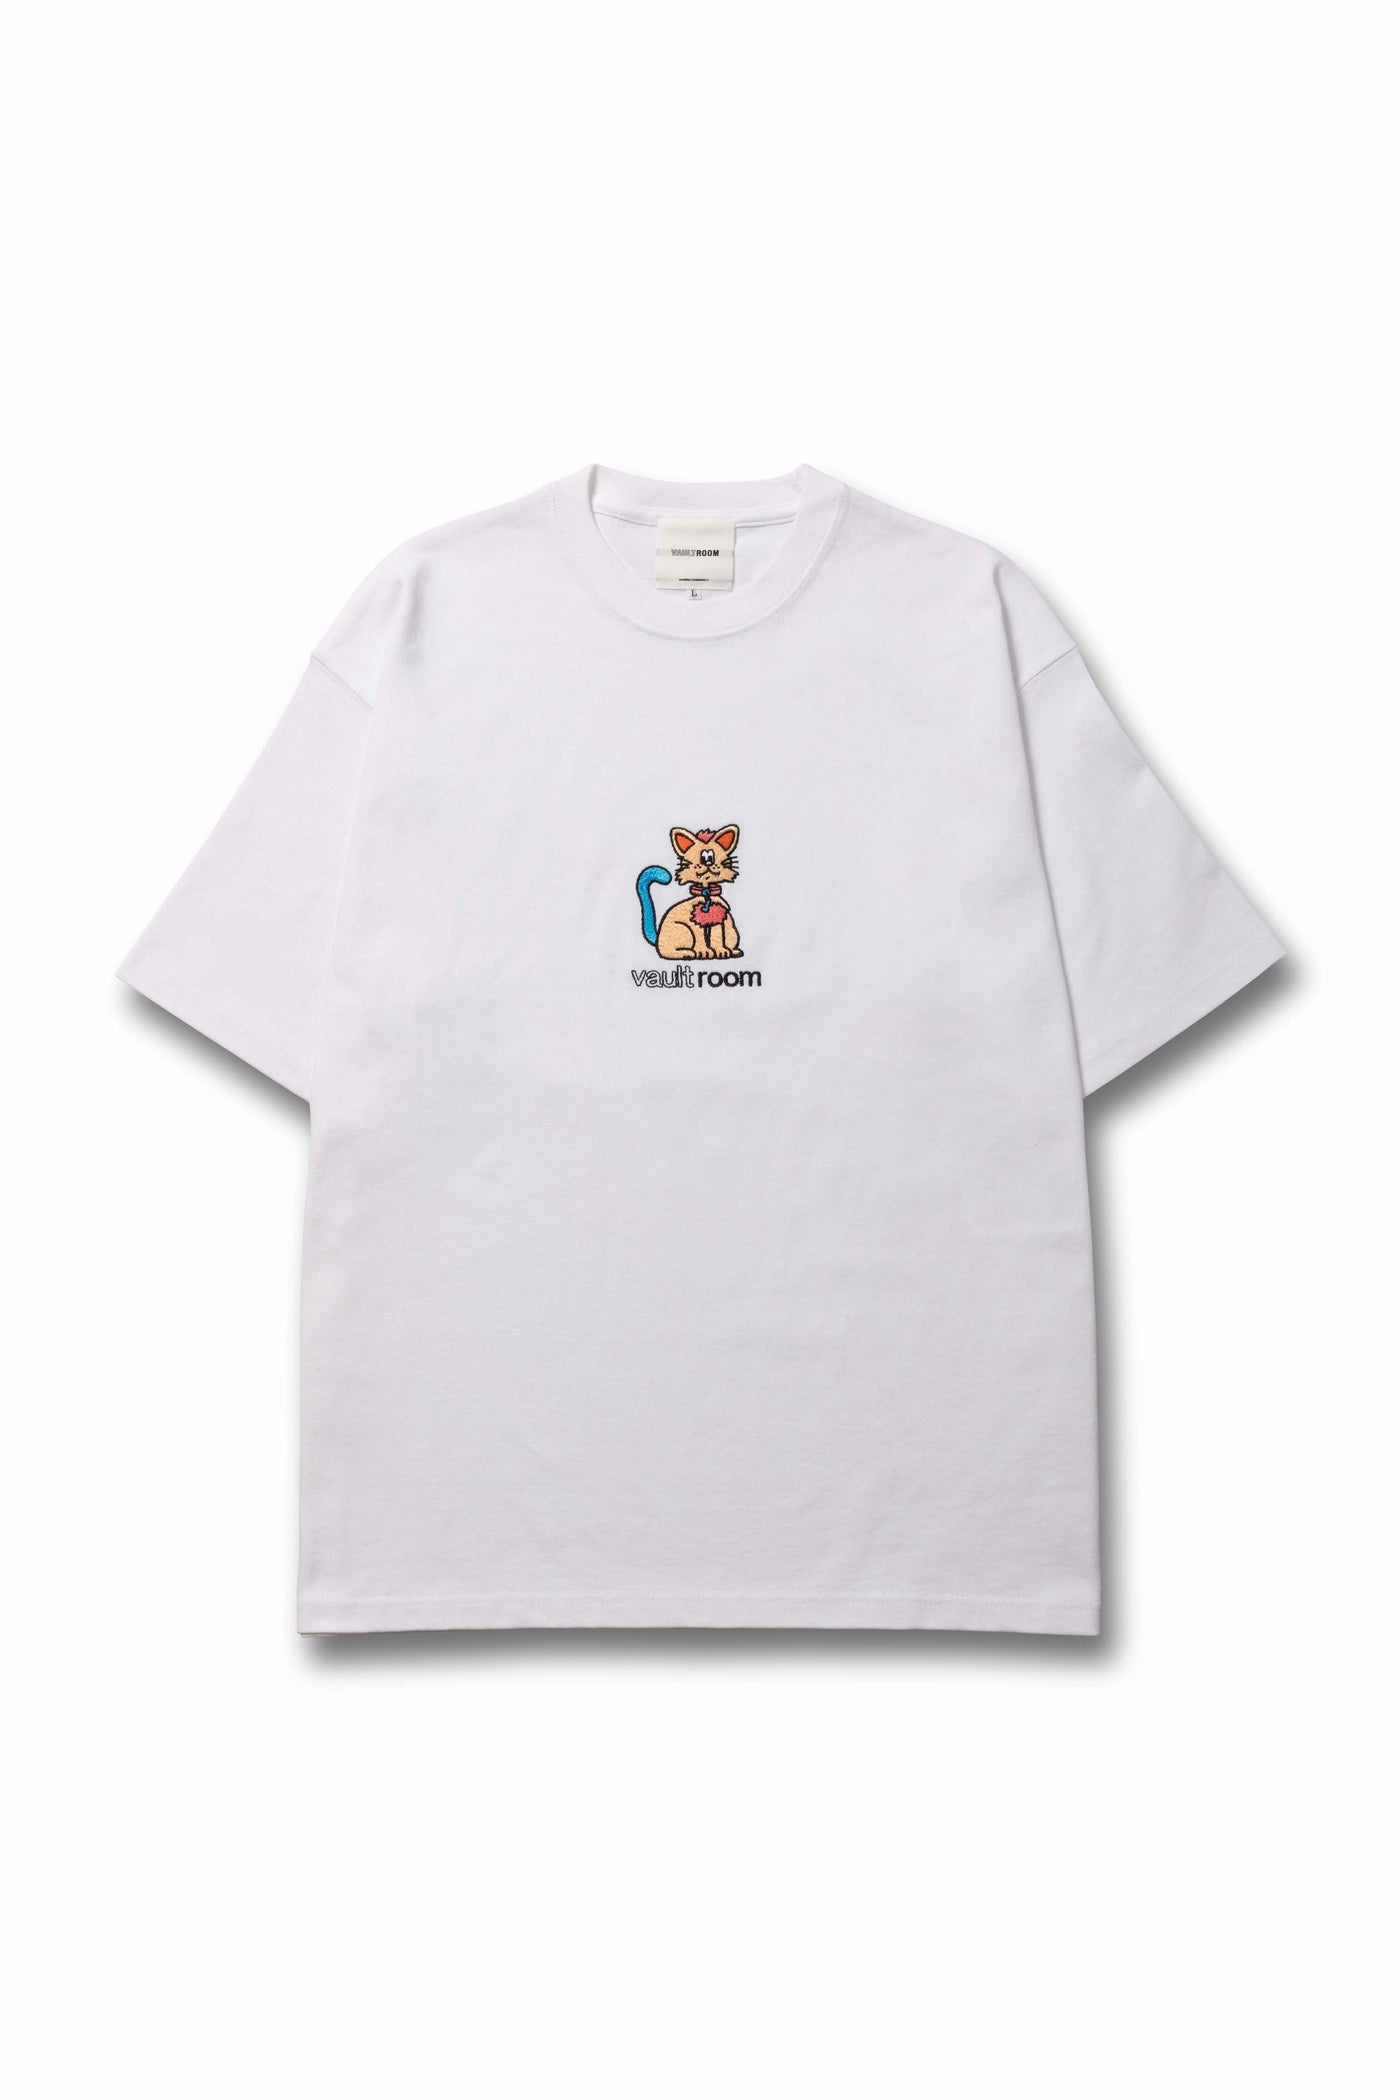 vaultroom KEY RABBIT MINI CROPPED TEE - Tシャツ(半袖/袖なし)